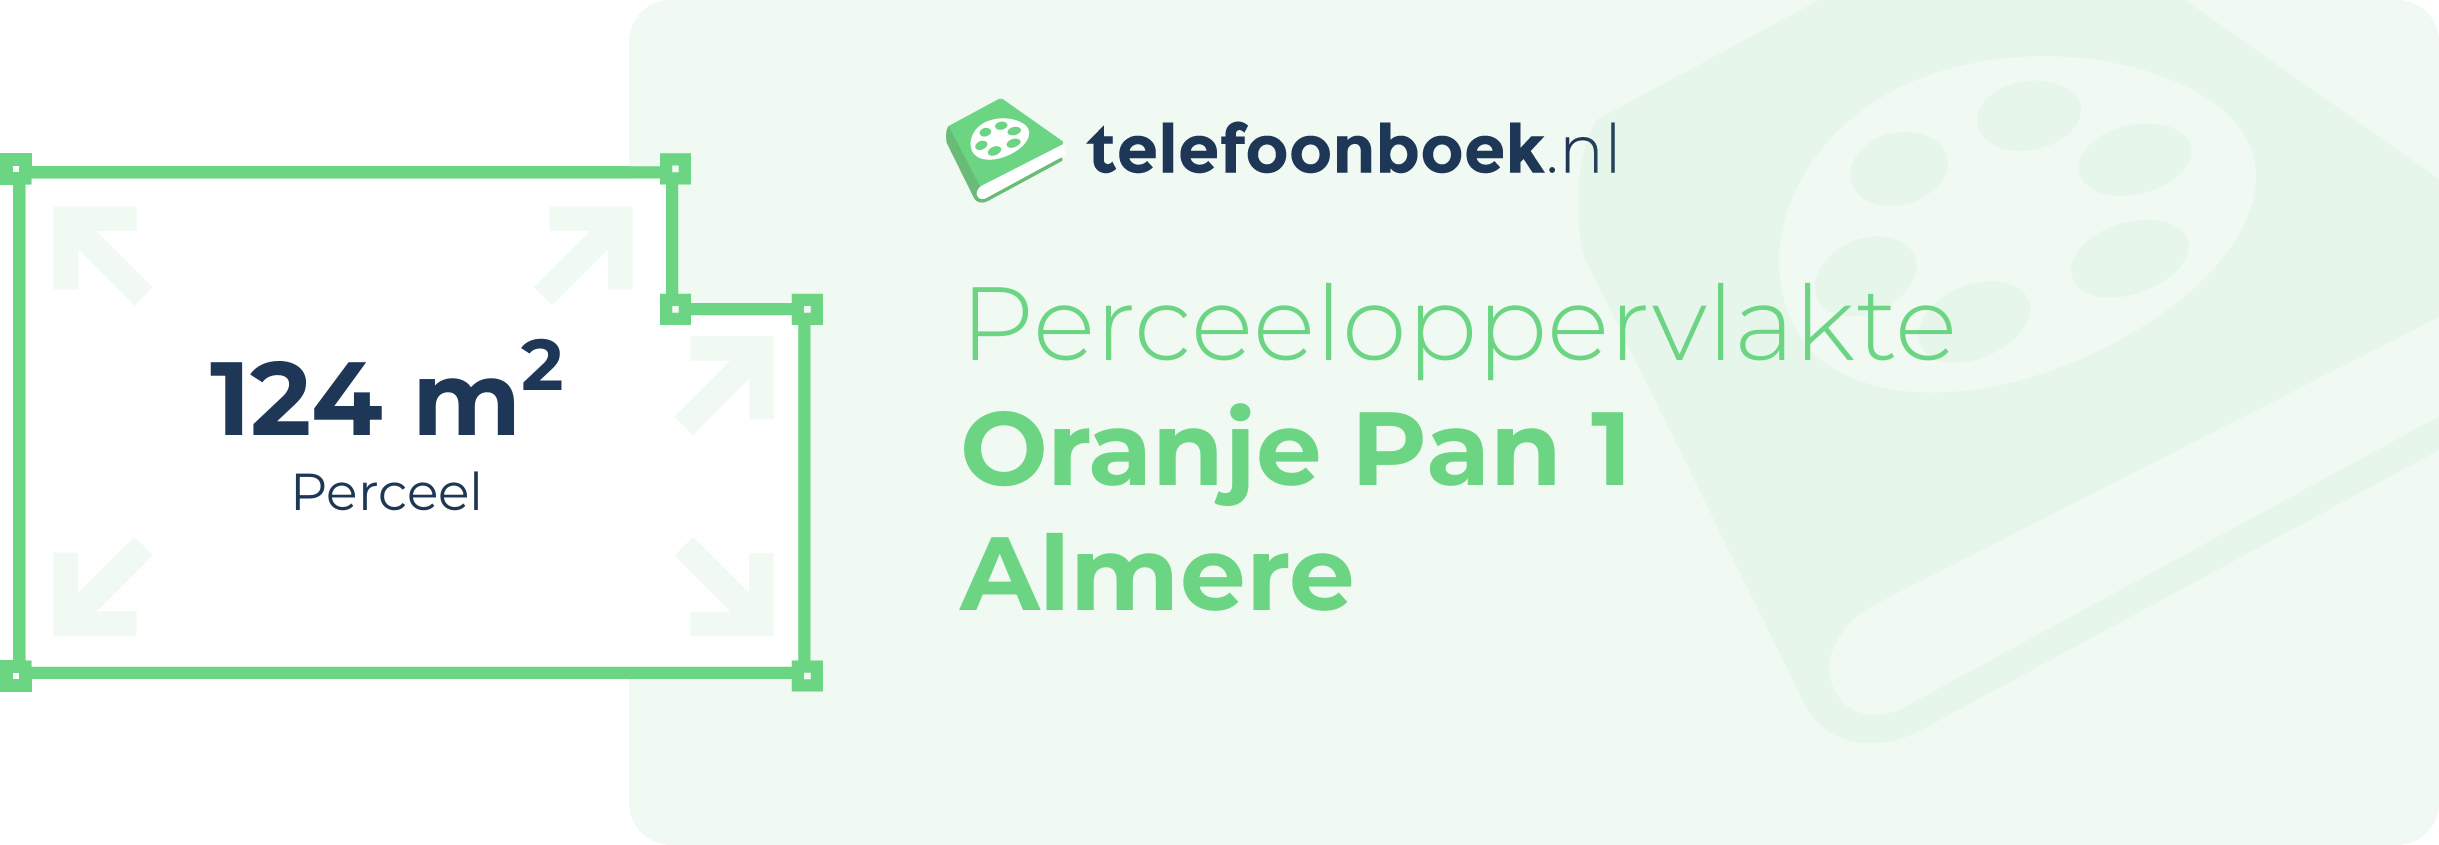 Perceeloppervlakte Oranje Pan 1 Almere